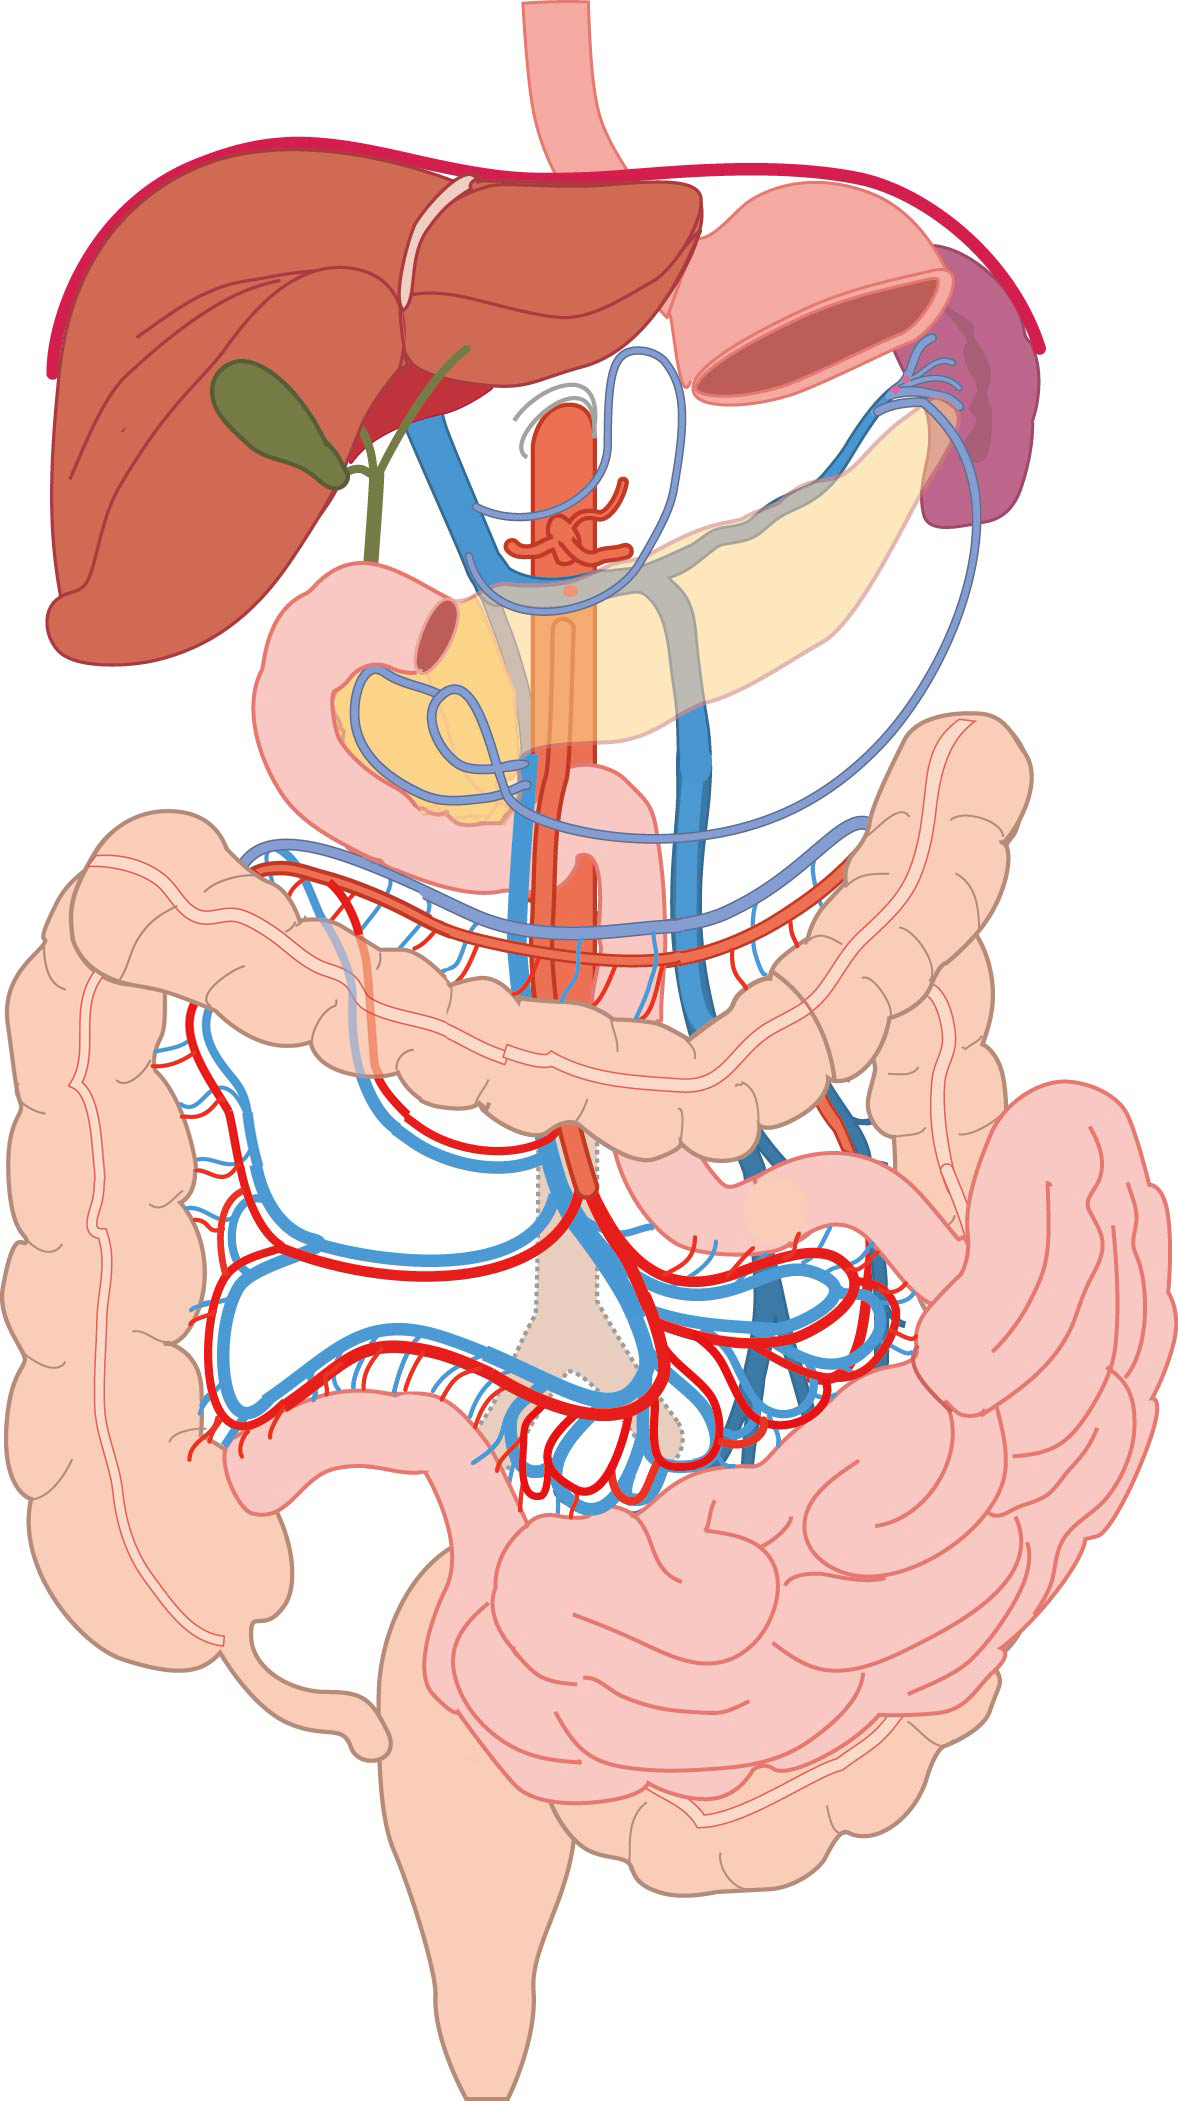 Vascularisation of the gut